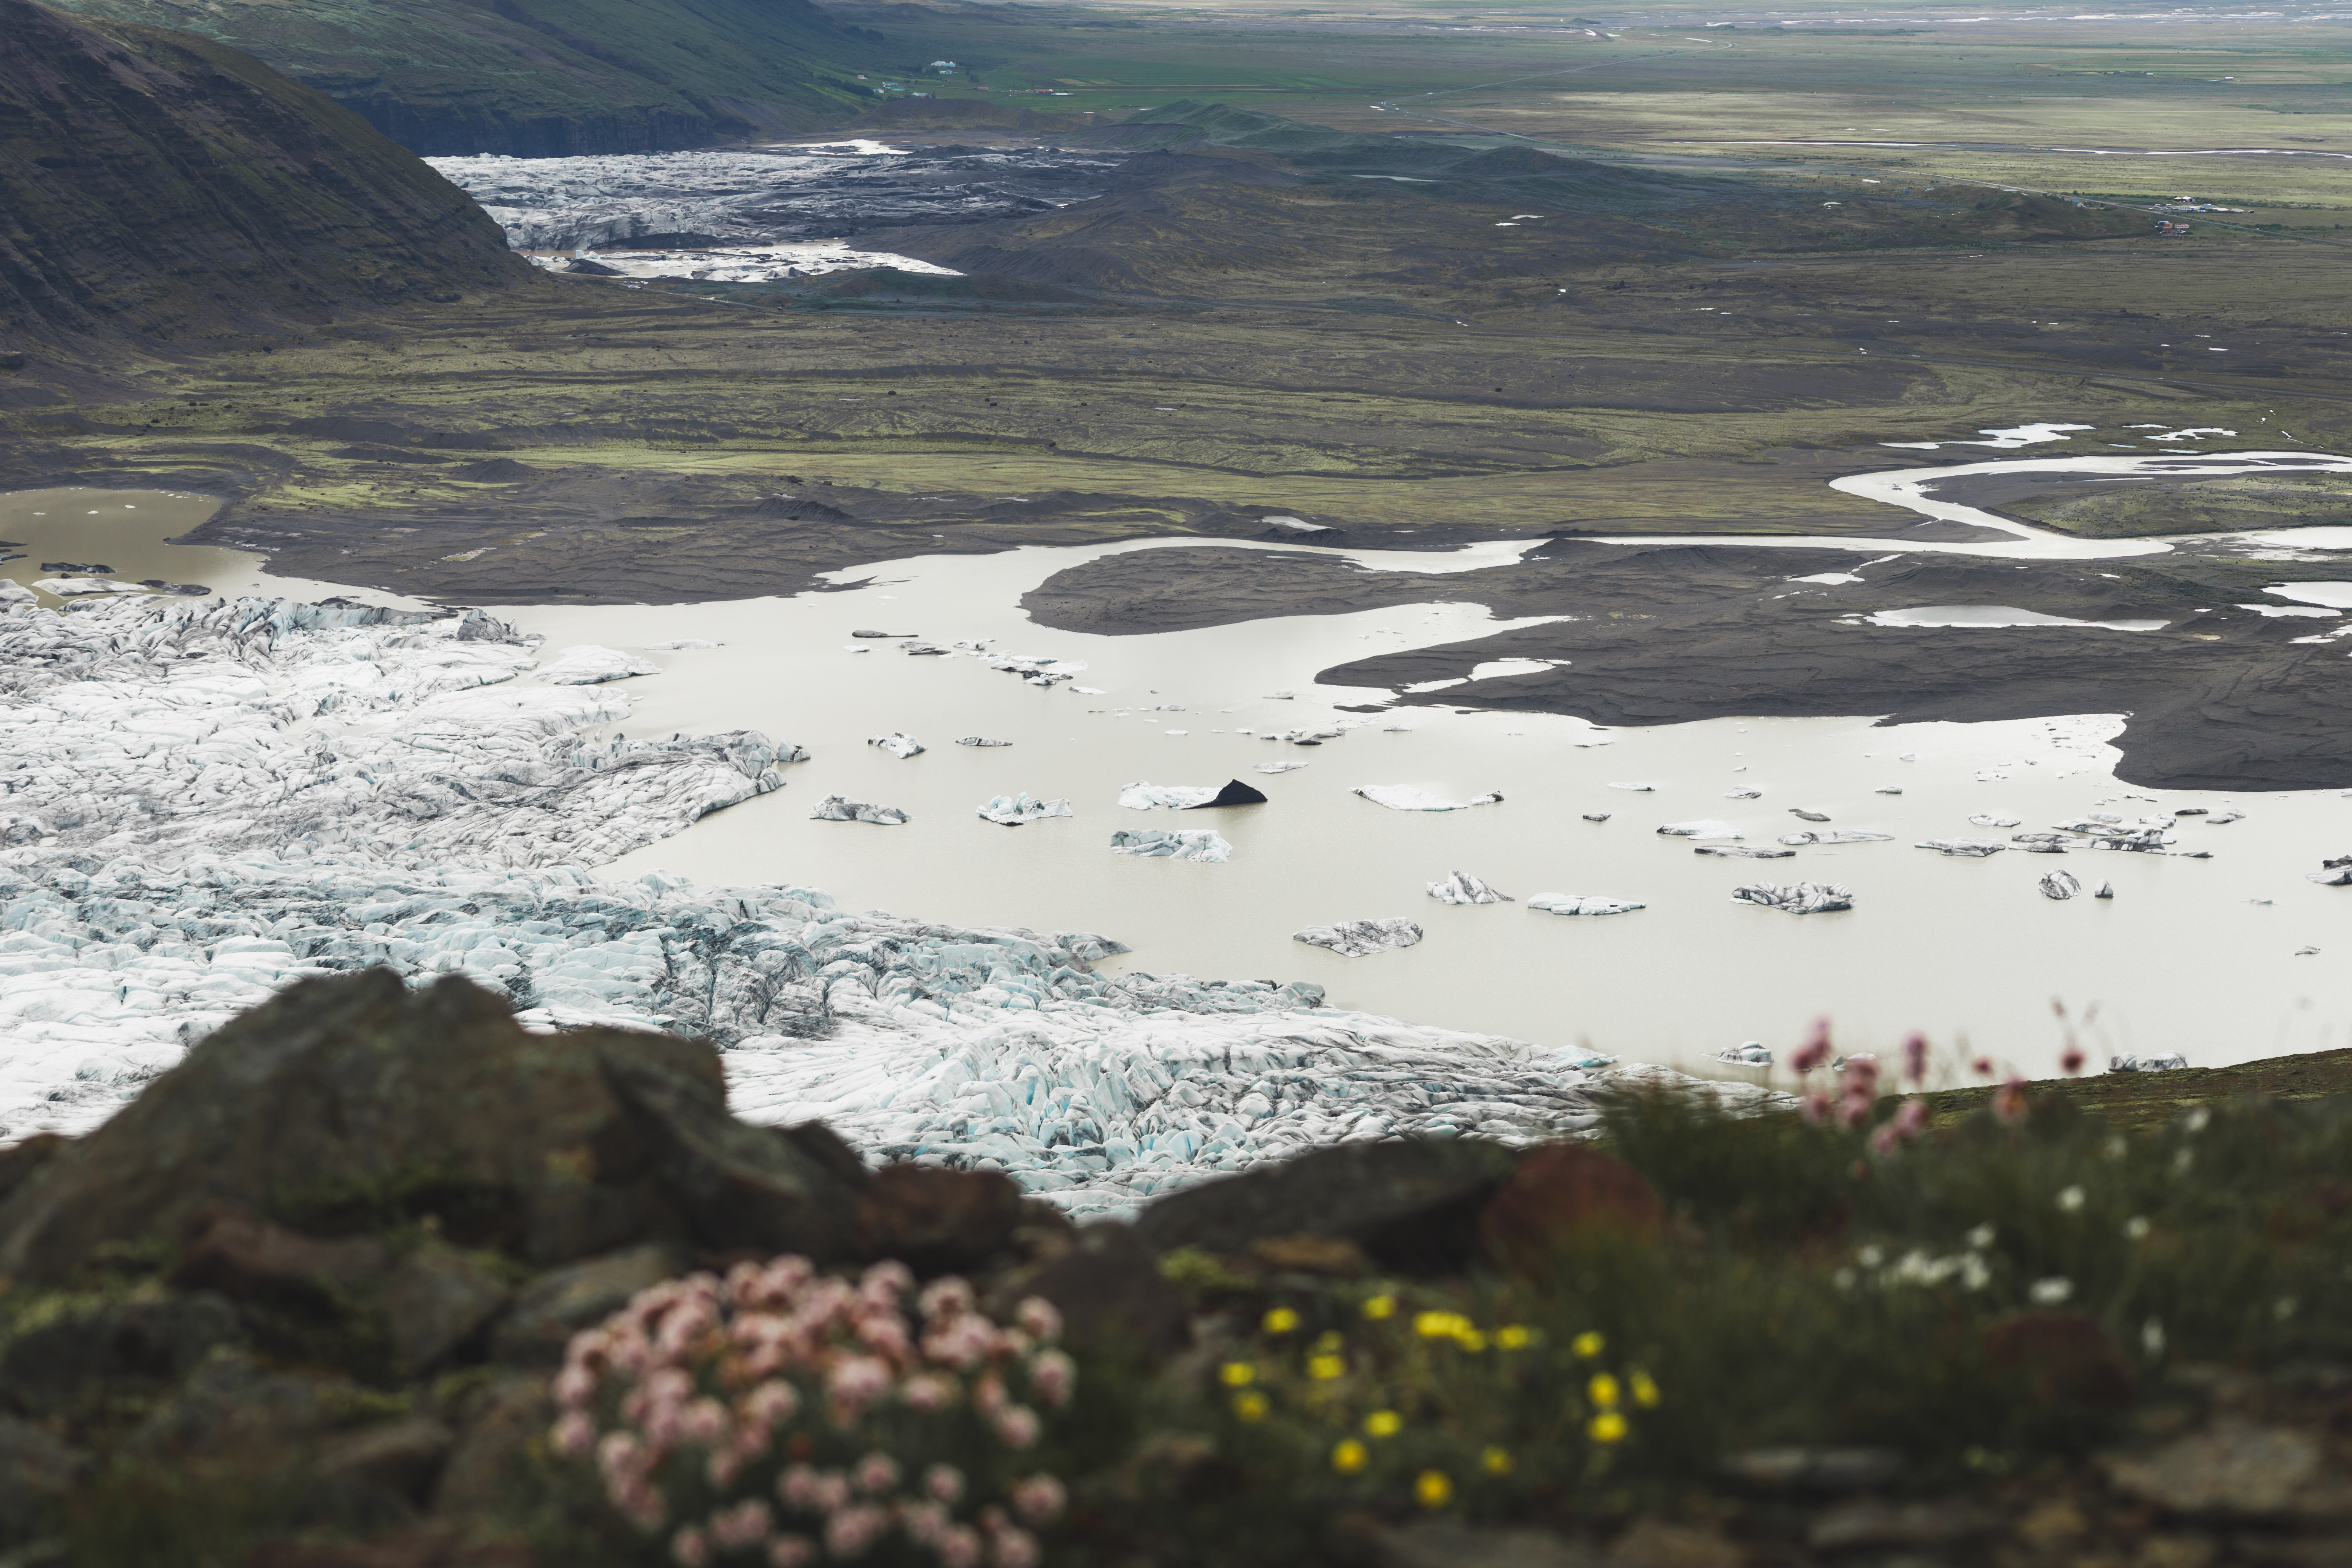 Islande | Le Cercle d'Or et les merveilles du sud - Skaftafellsjökull, boucle du Skaftafellsheiði